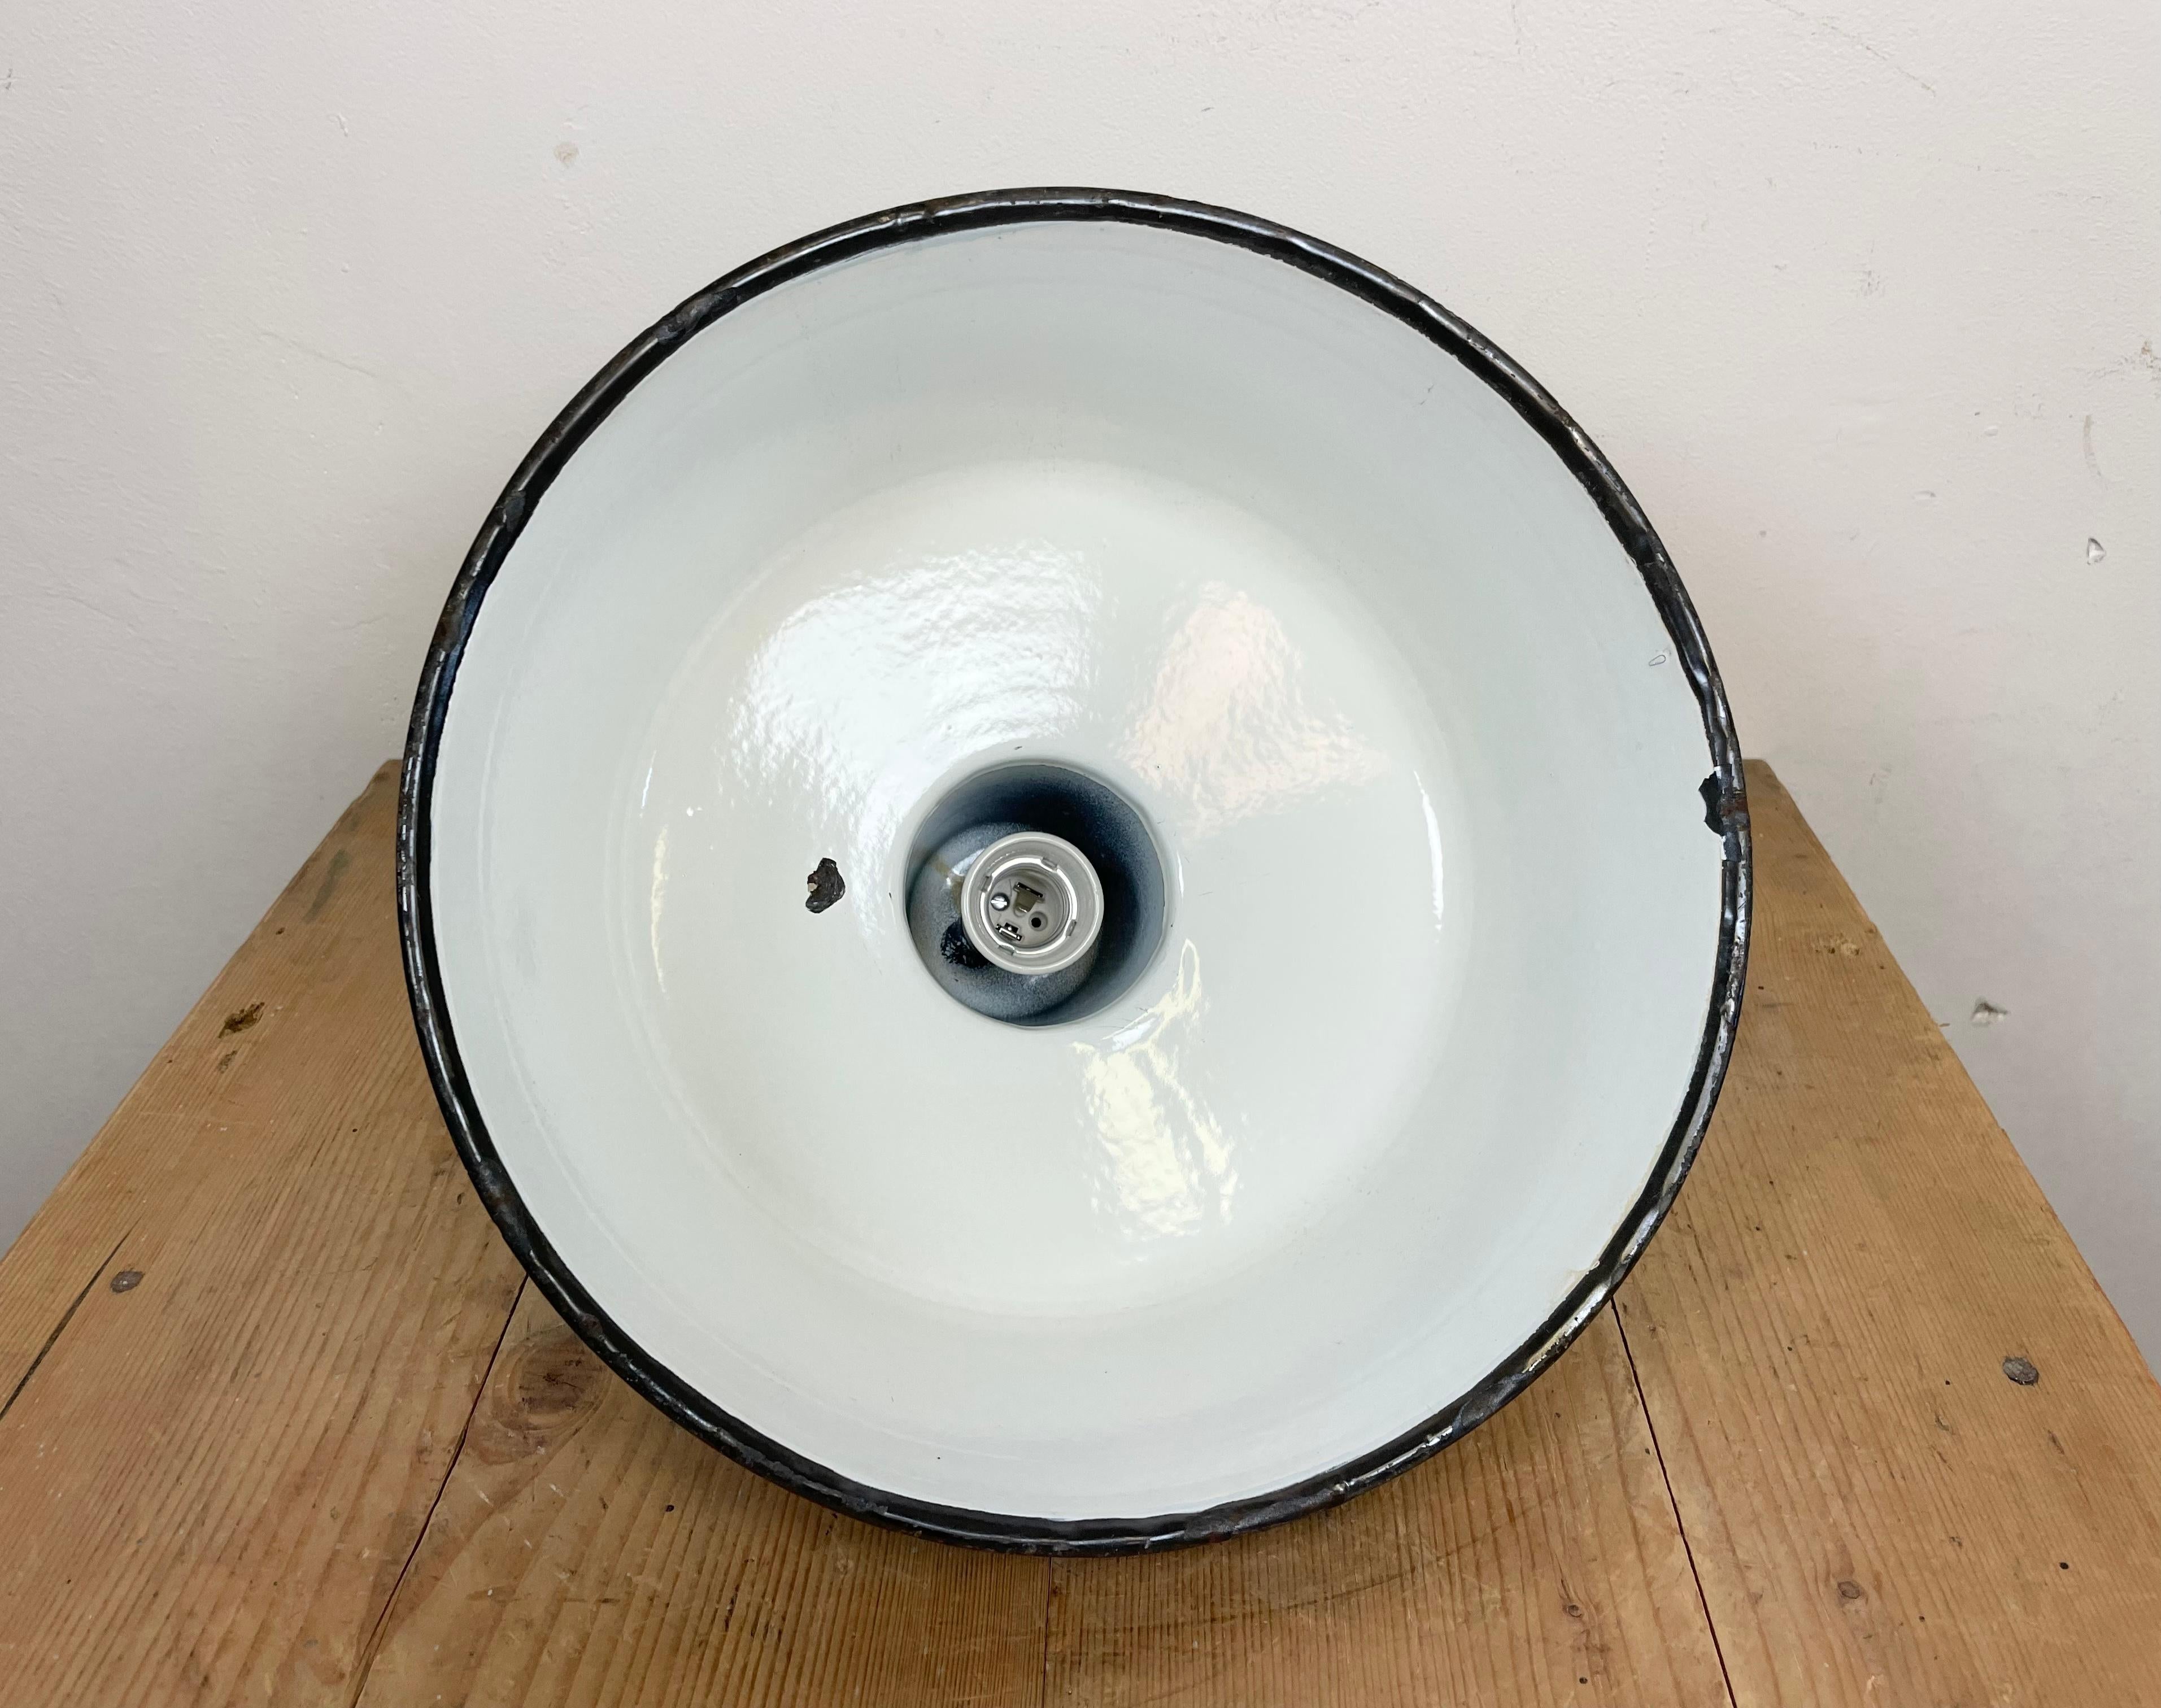 Industrial Green Enamel Pendant Lamp, 1960s For Sale 7